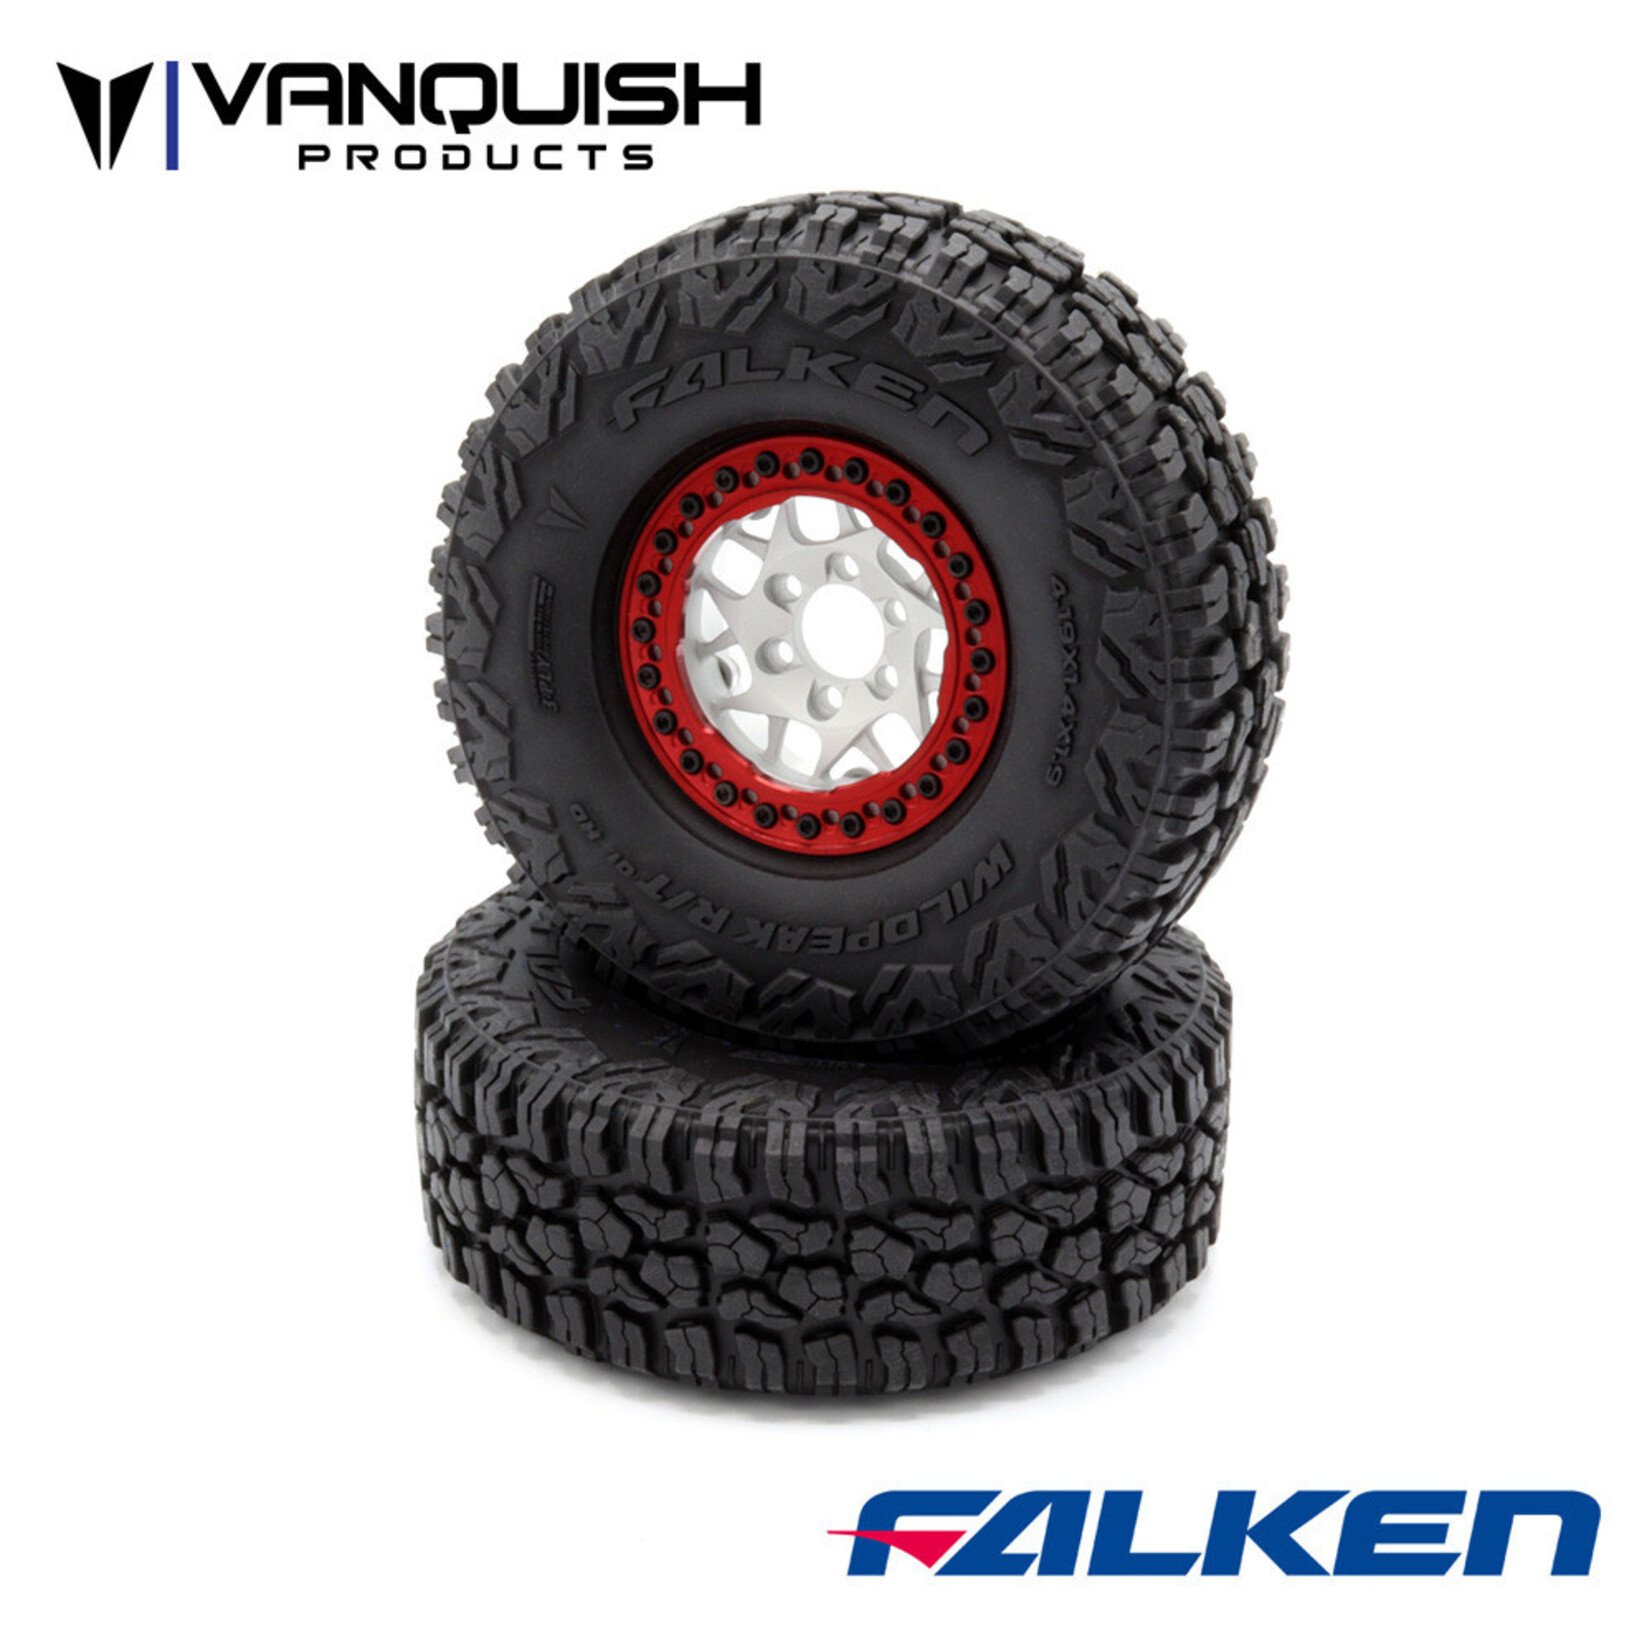 Vanquish Products Falken Wildpeak R/T 1.9" Class 1 Rock Crawler Tires (2) (Red)